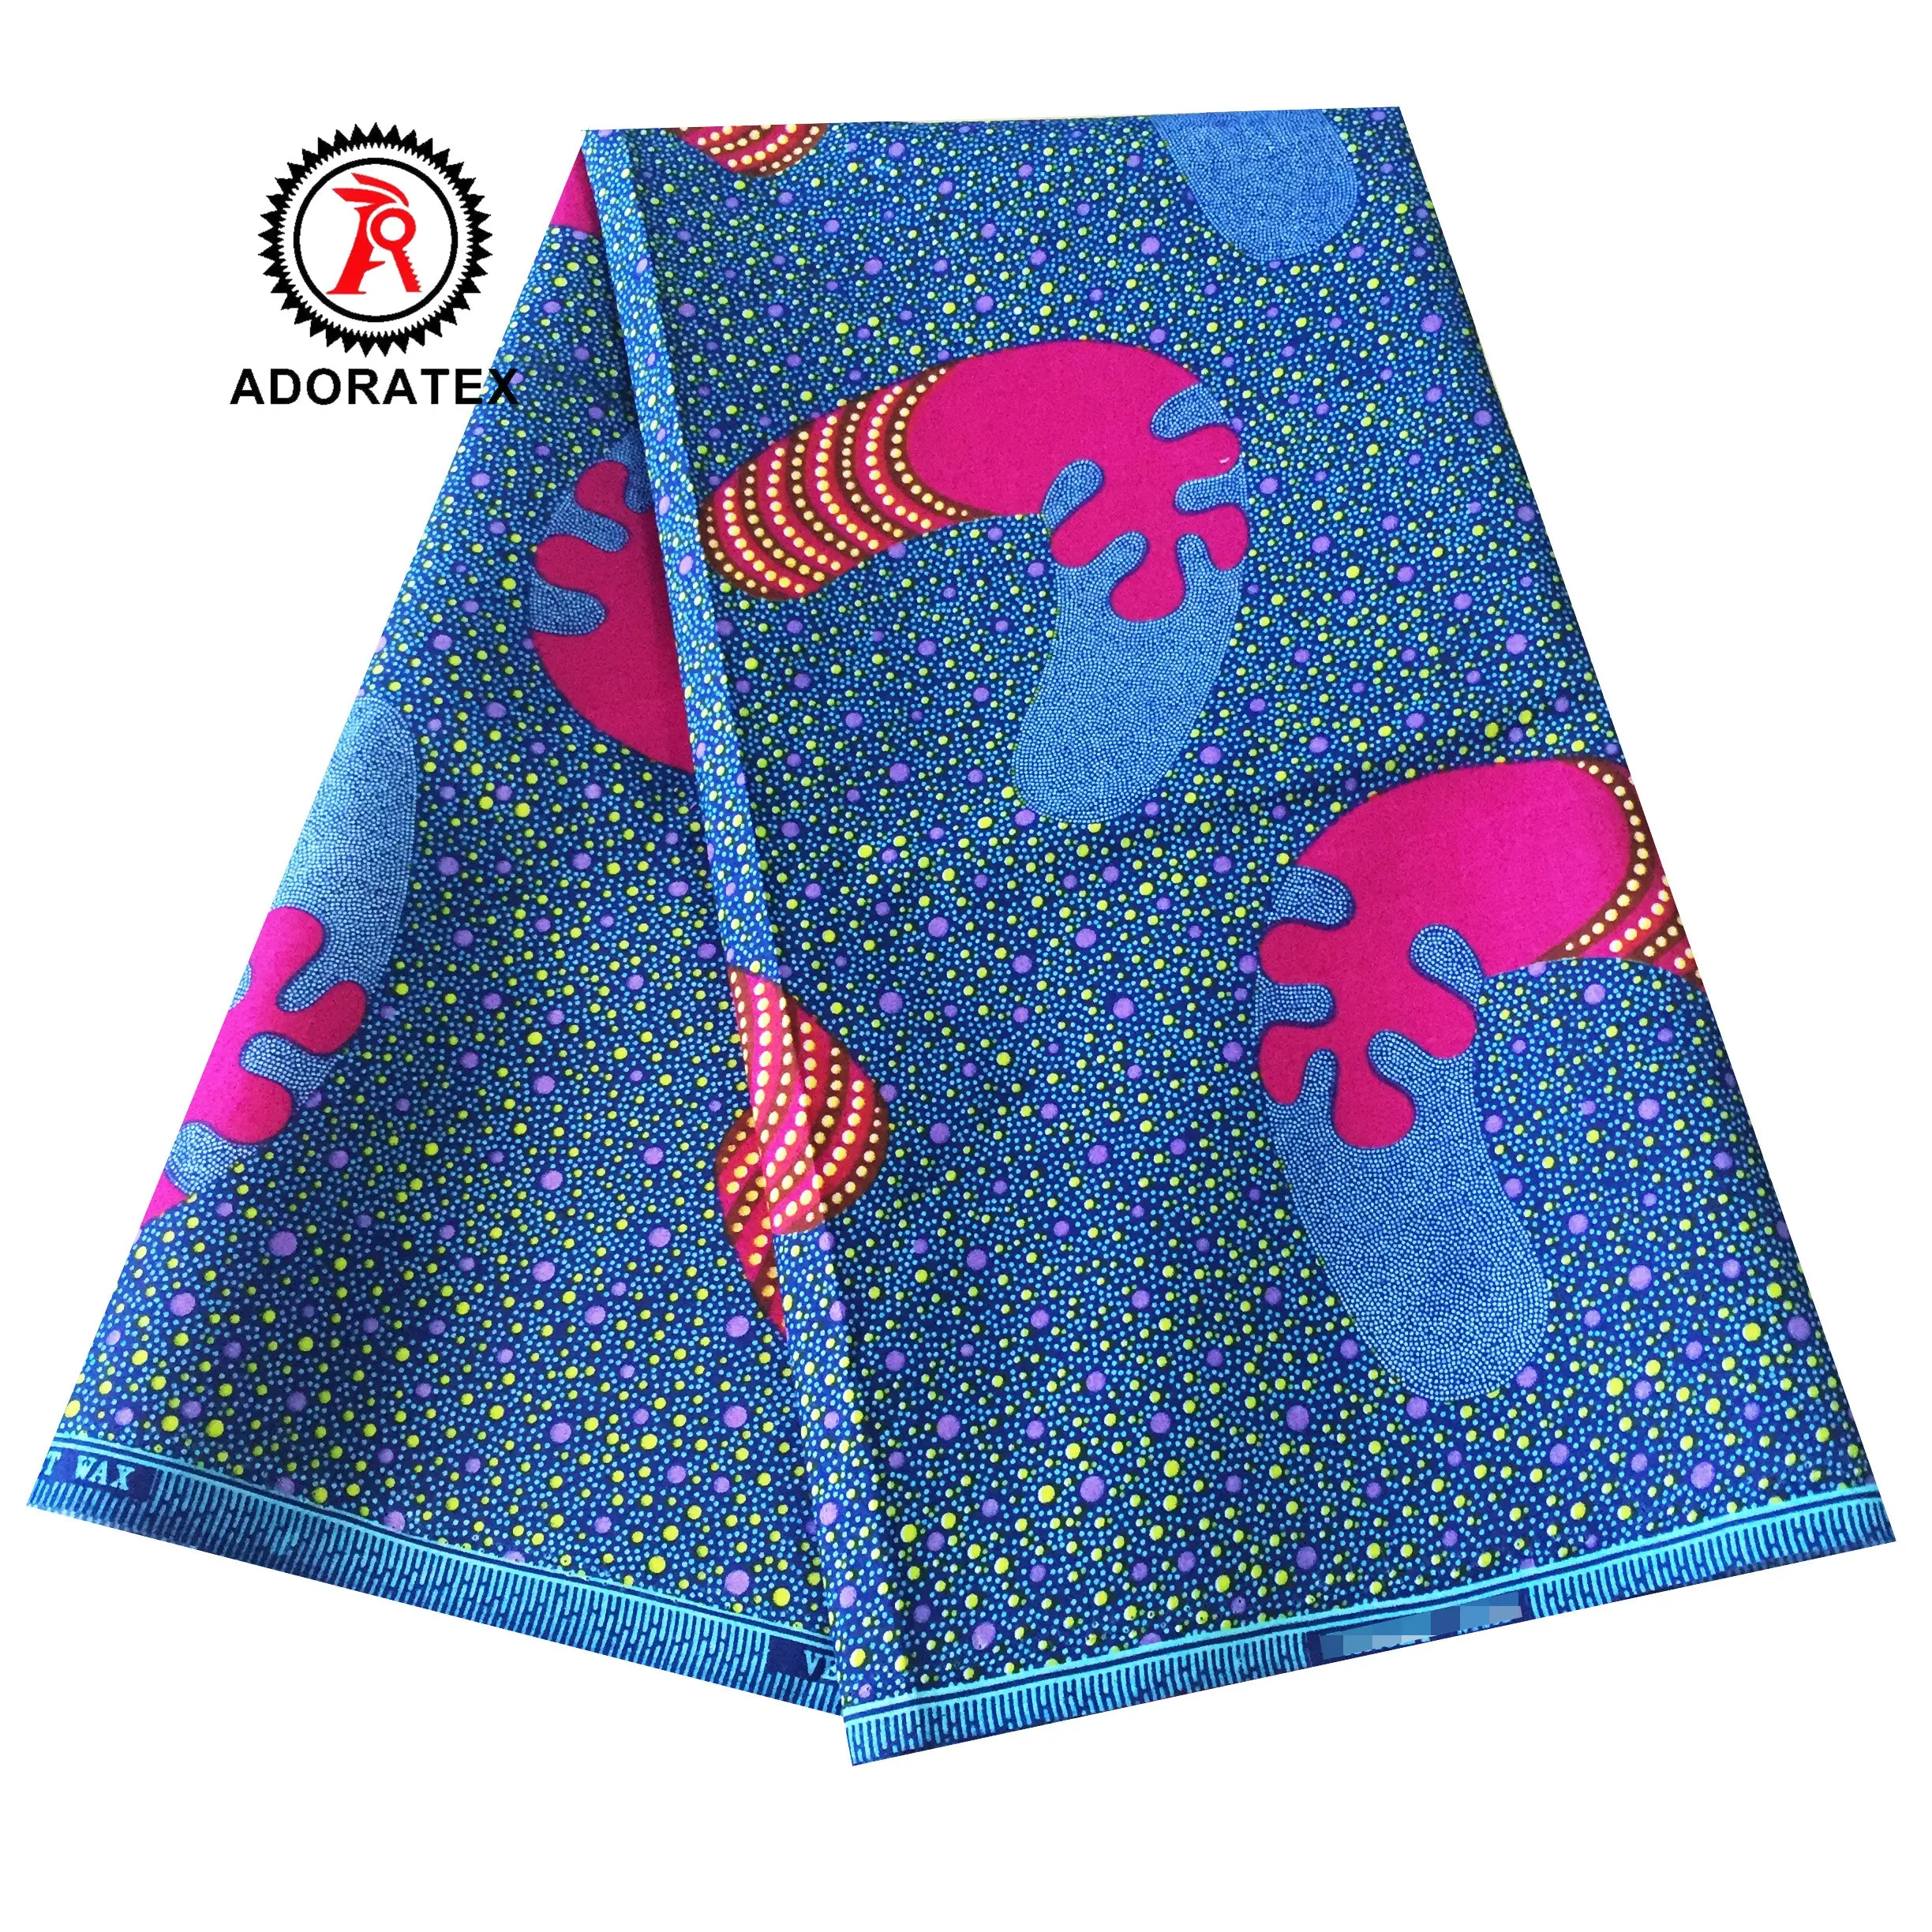 Adoratex Biru dan Merah Muda Desain Tanzania Kain Tekstil 100% Katun